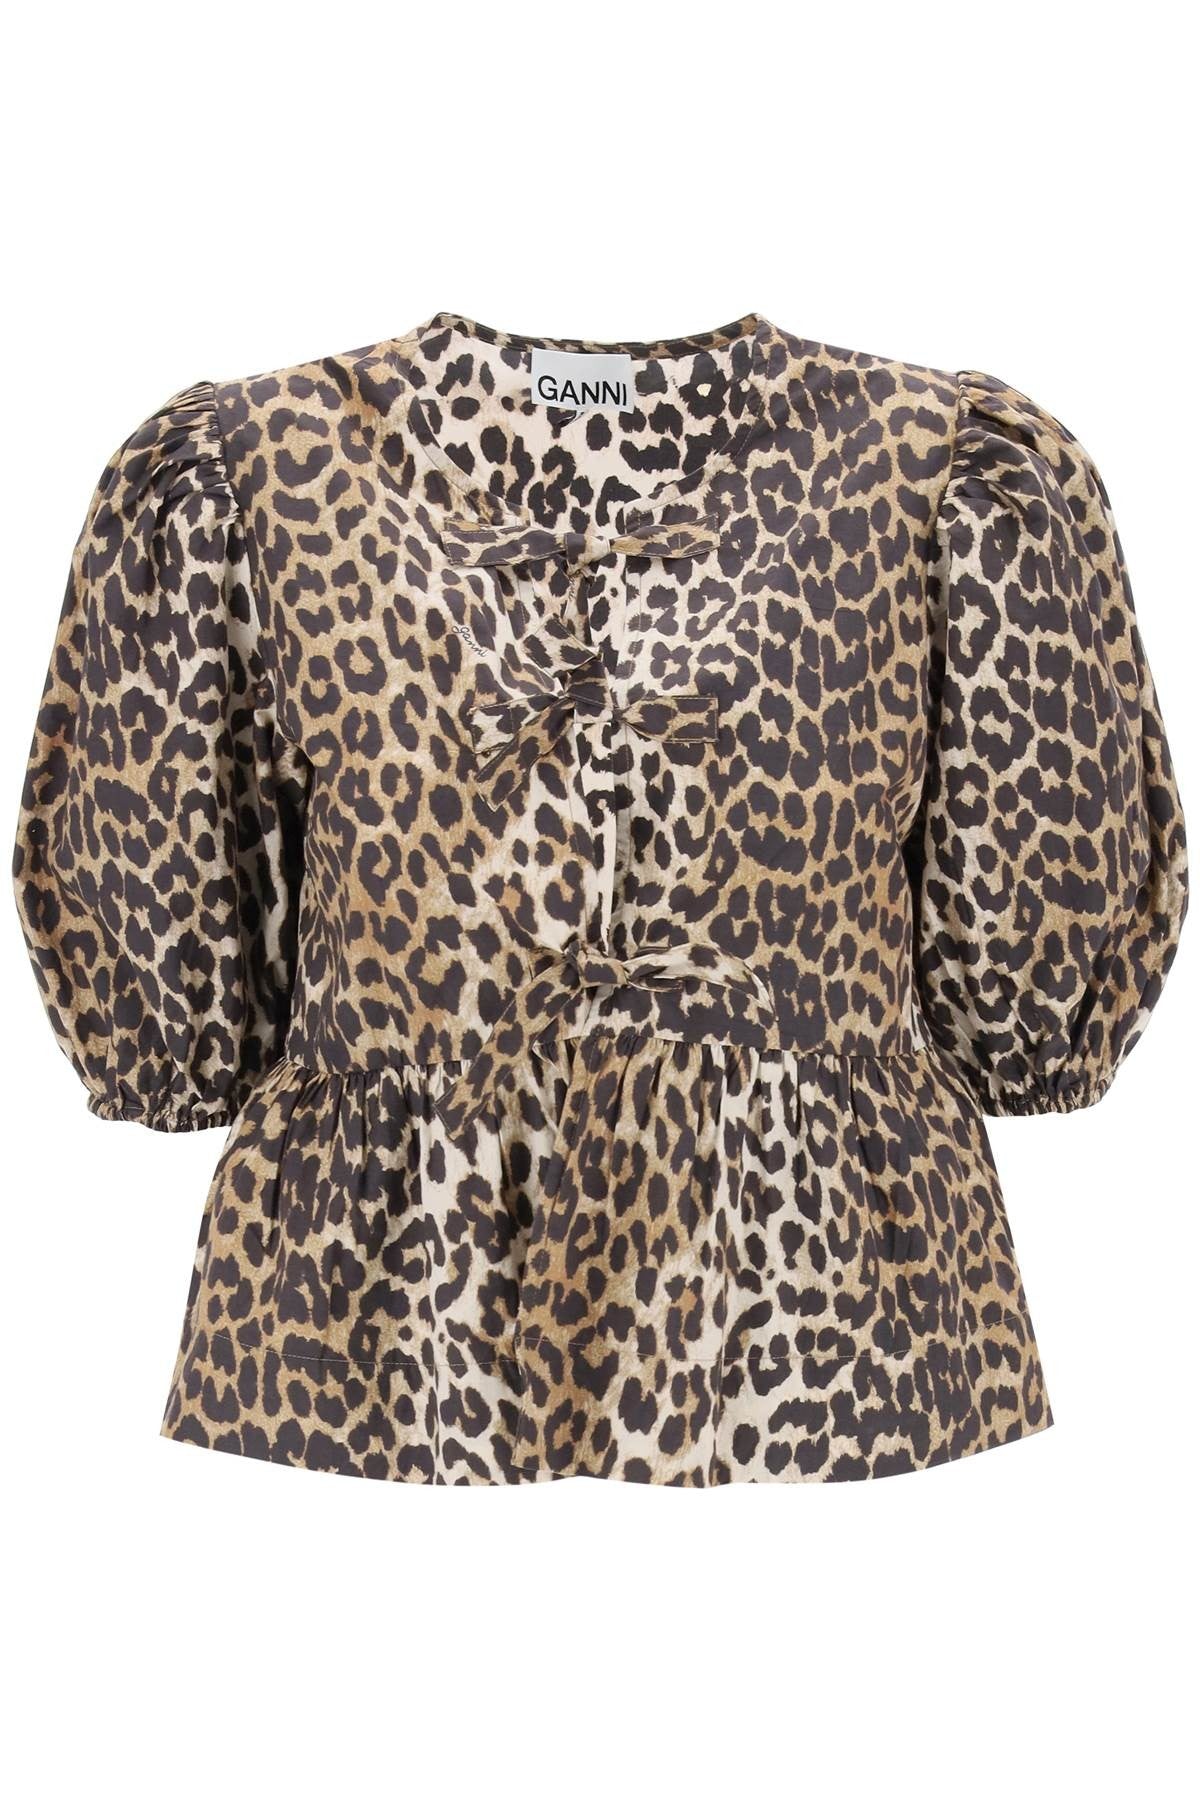 Ganni leopard print peplum blouse